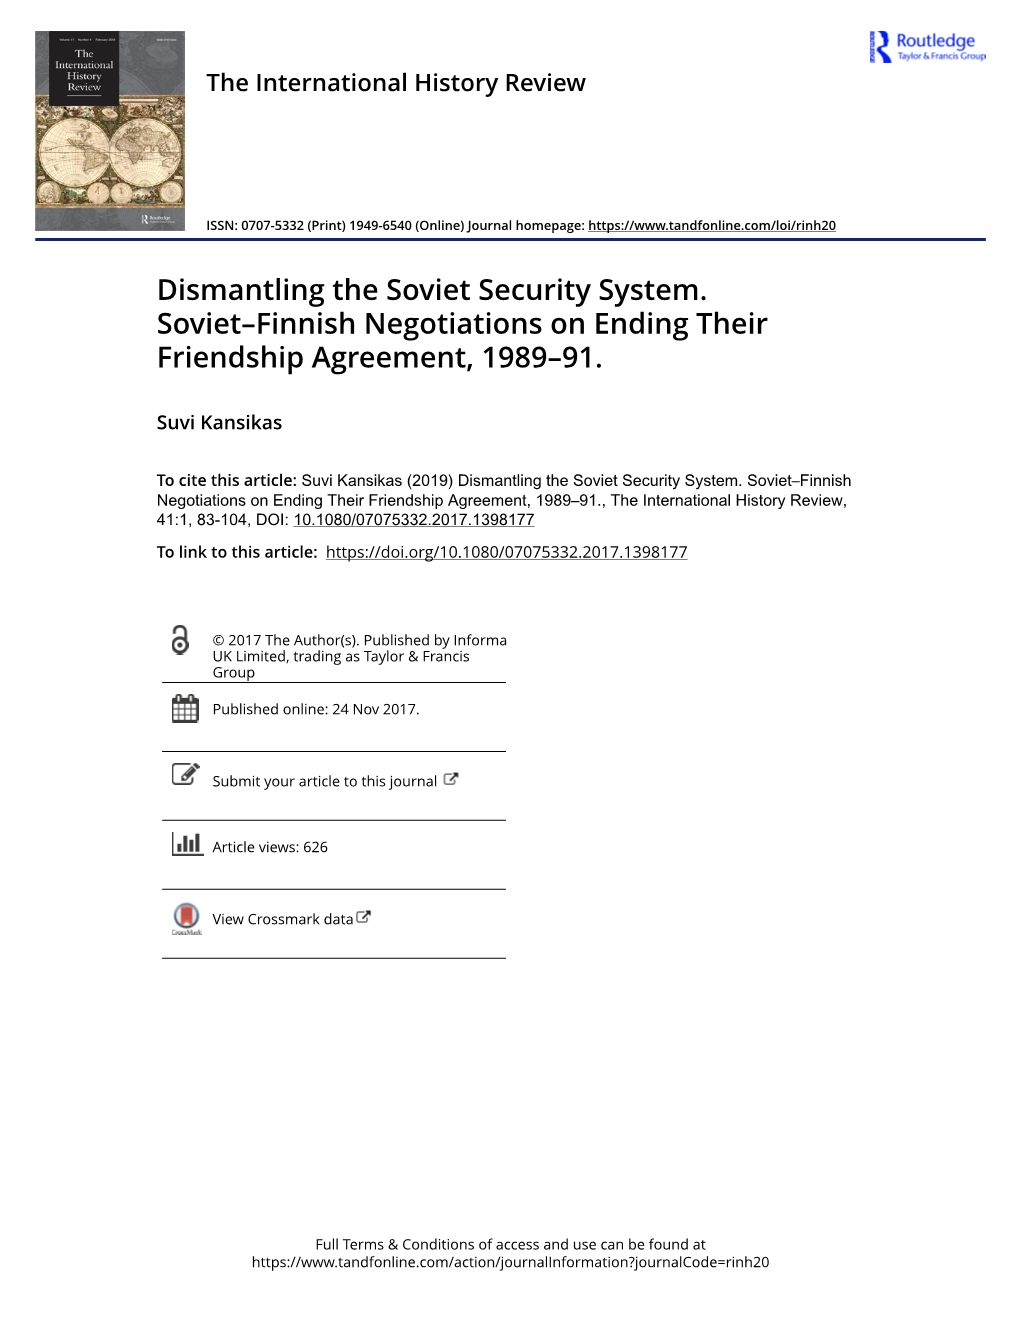 Dismantling the Soviet Security System. Soviet-Finnish